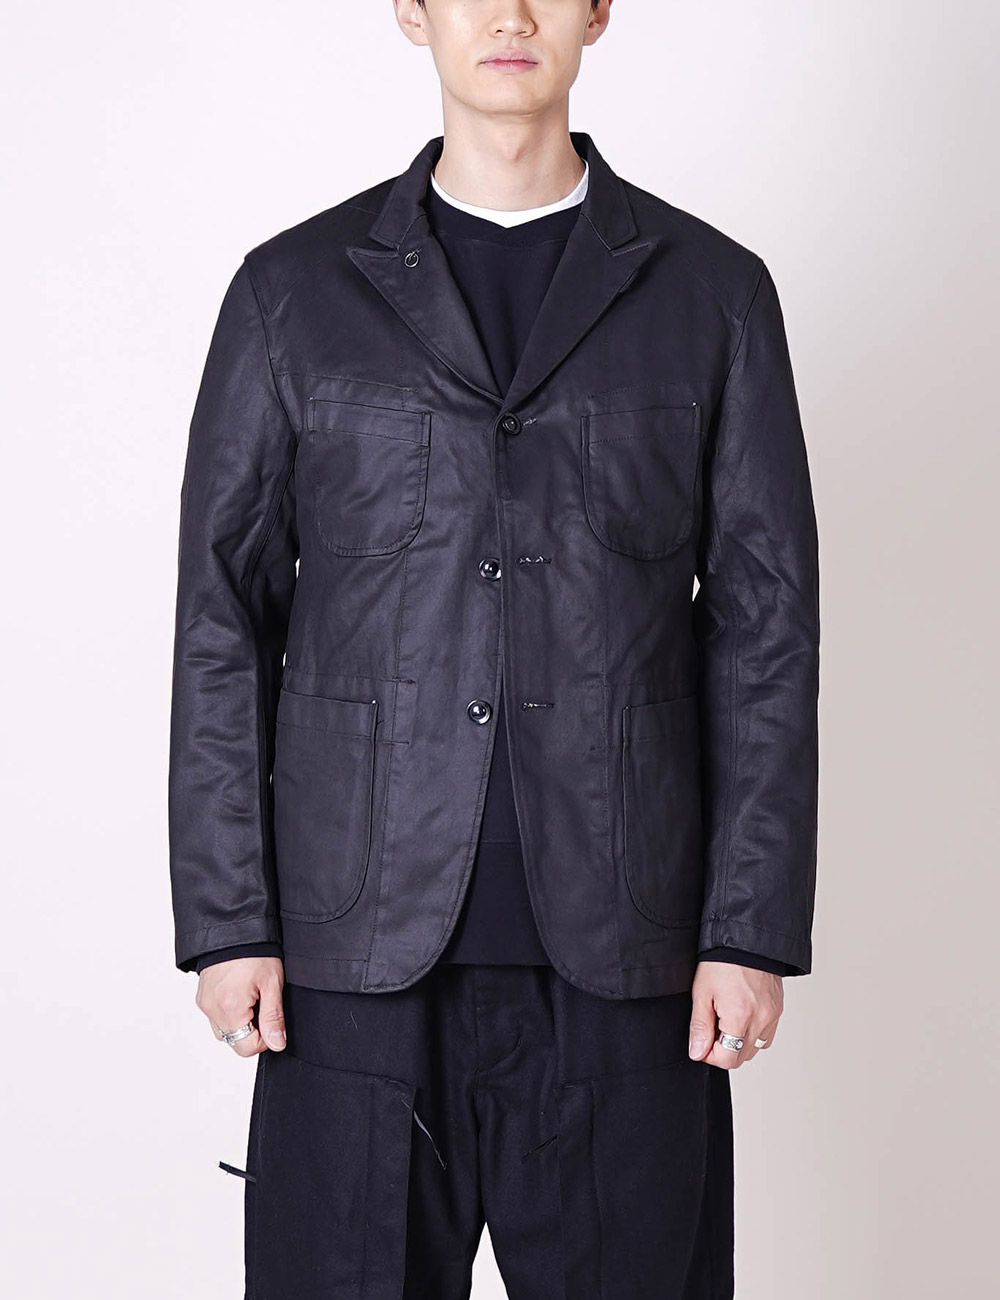 Engineered Garments : Bedford Jacket (Black Coated Twill)